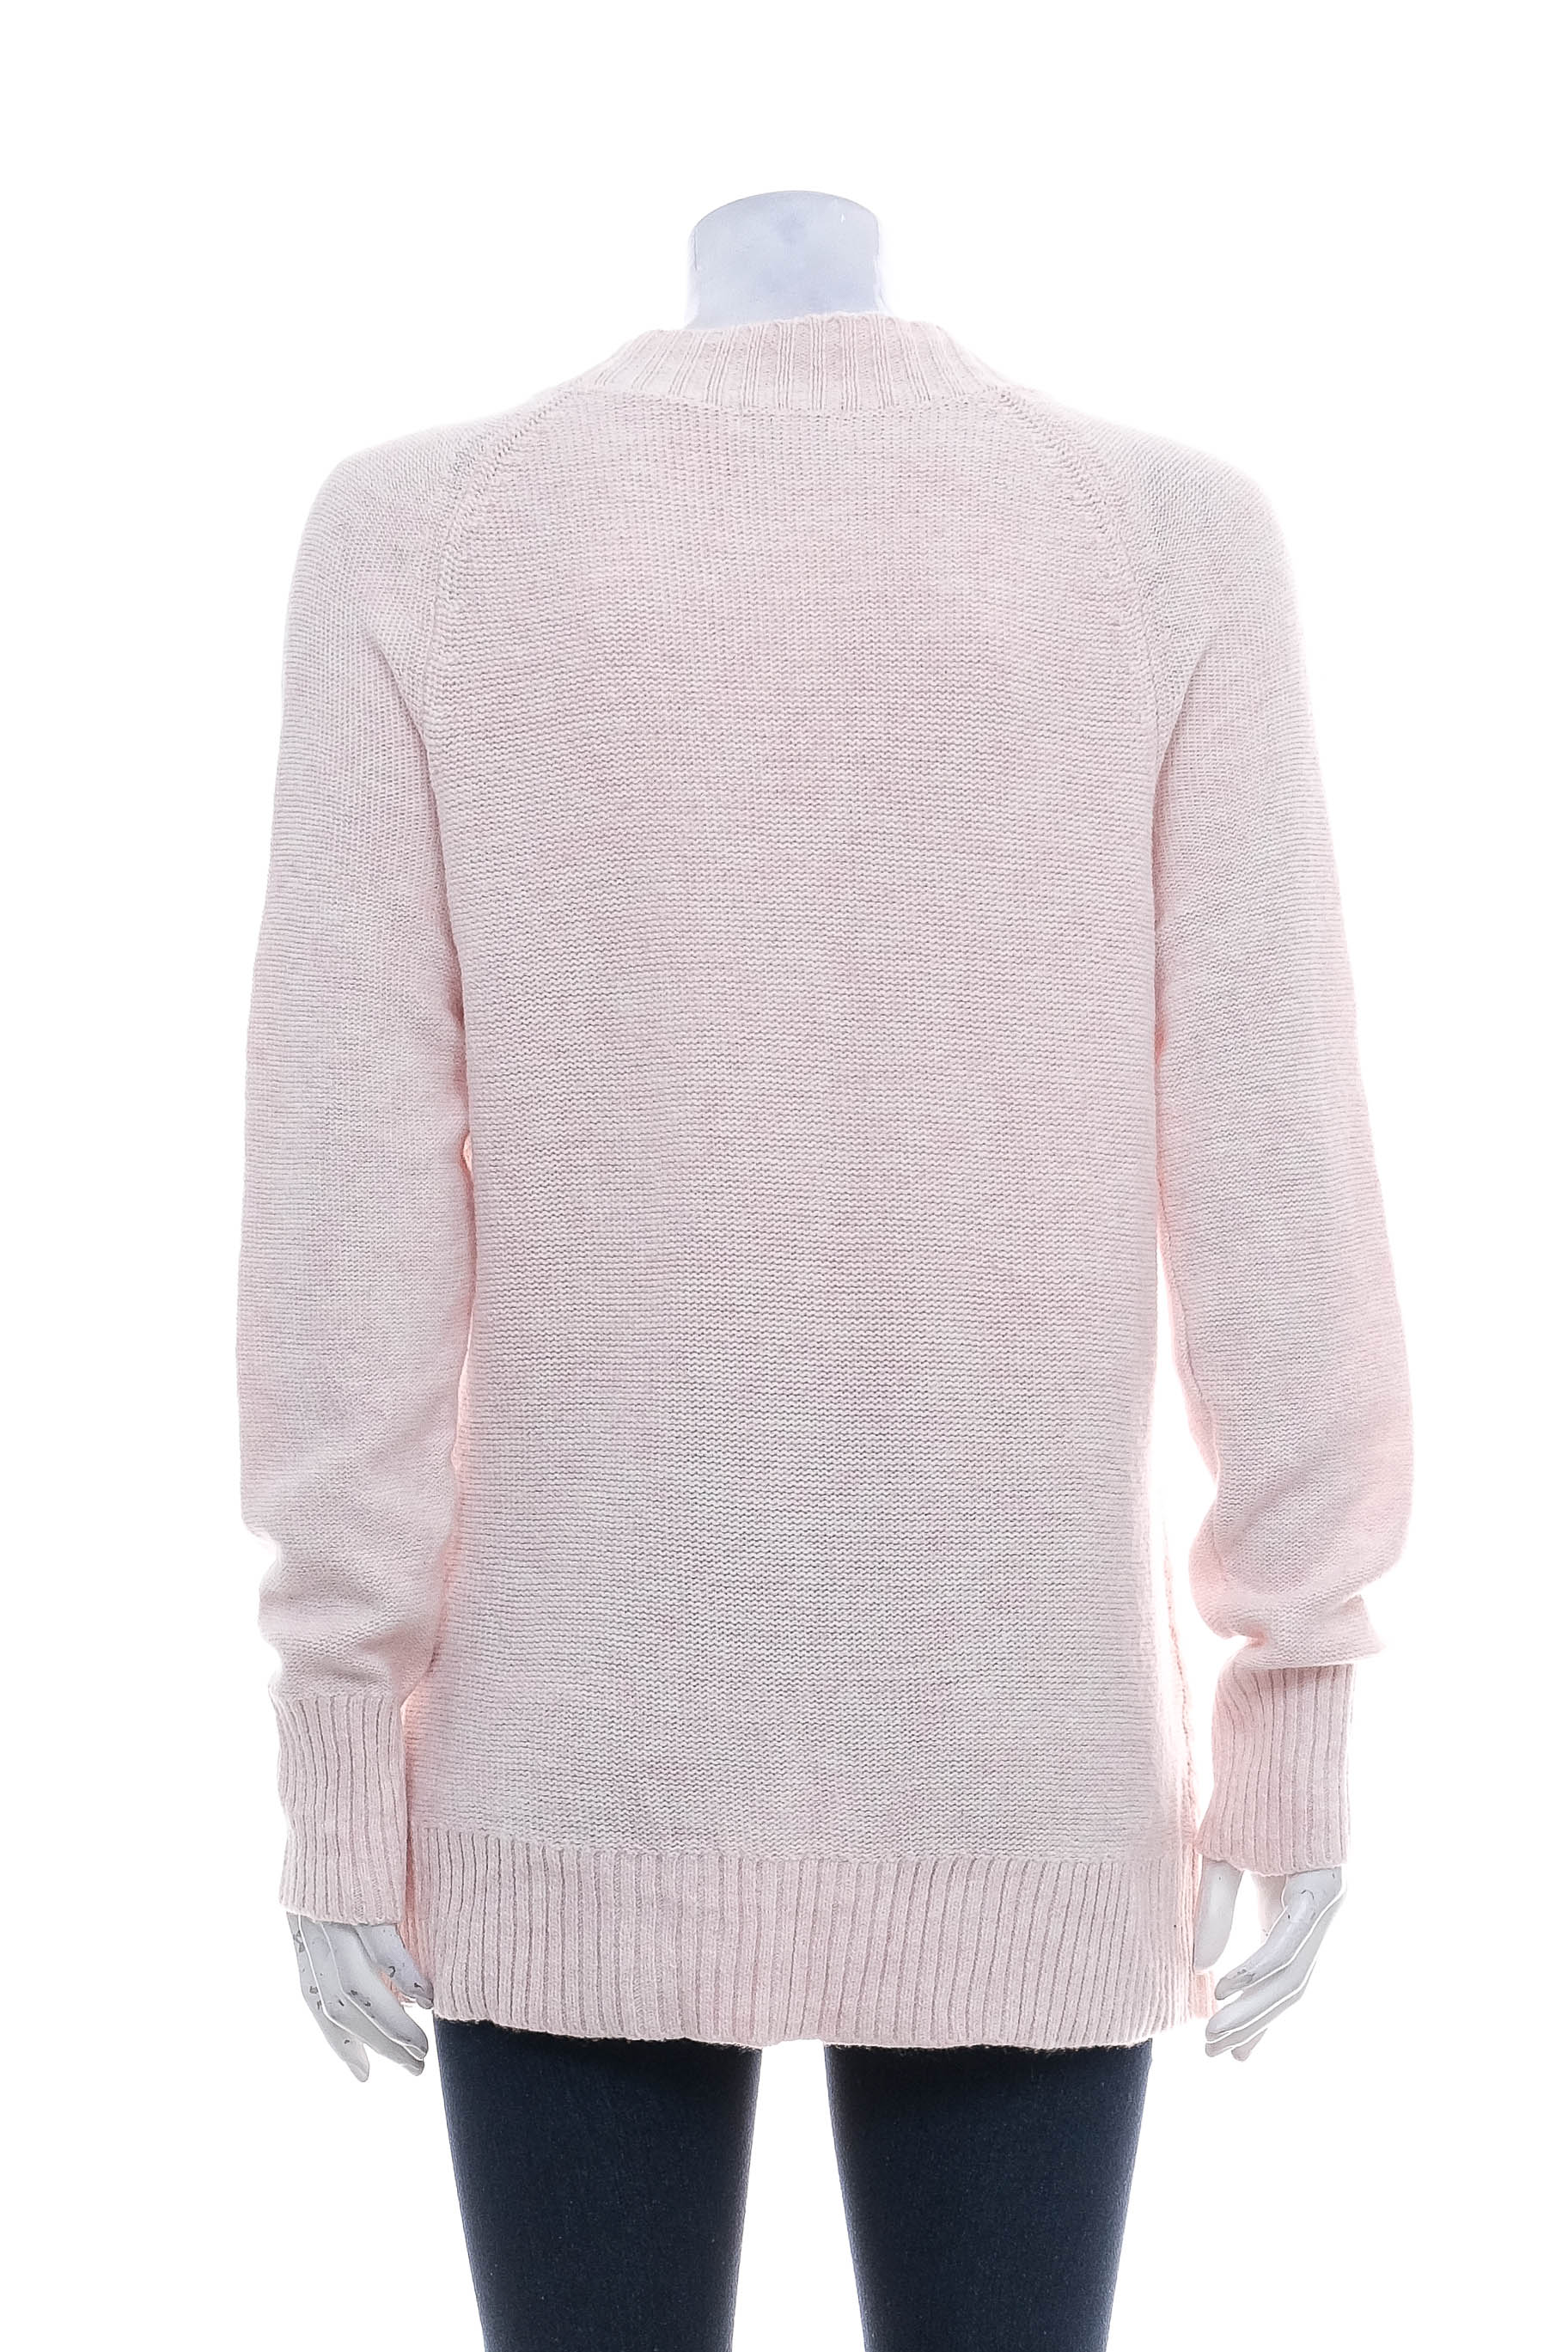 Women's sweater - Merona - 1